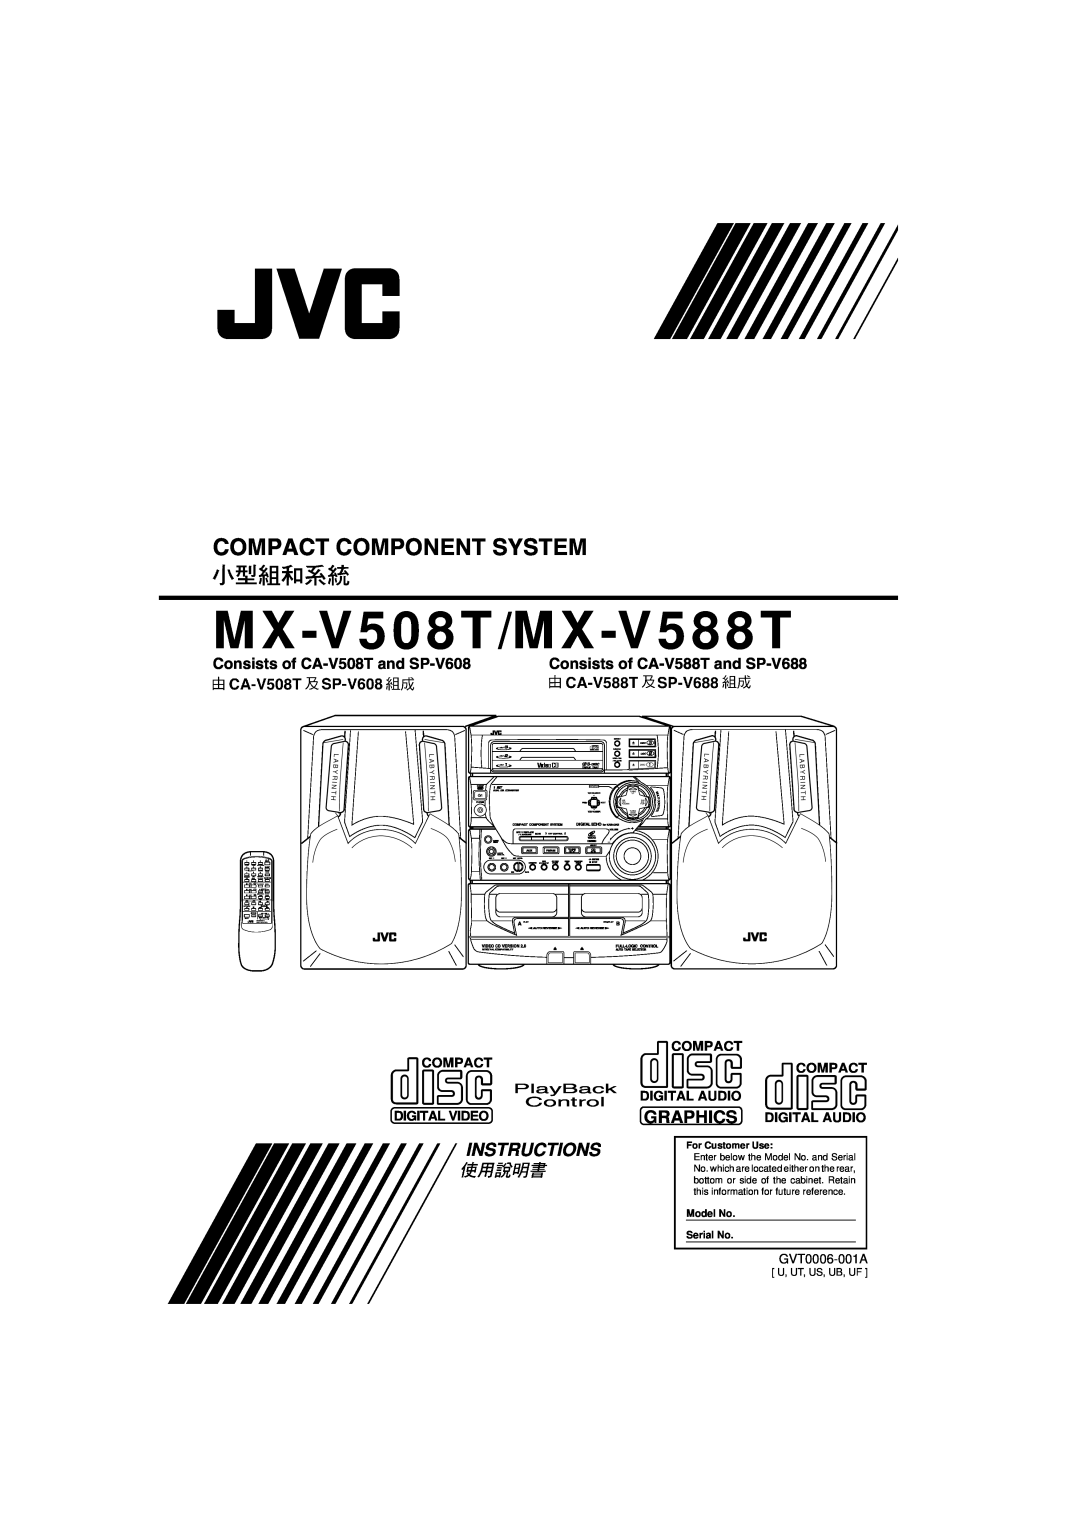 JVC manual MX-V508T/MX-V588T, Compact Component System, Instructions, Consists of CA-V508Tand SP-V608, PlayBack Control 